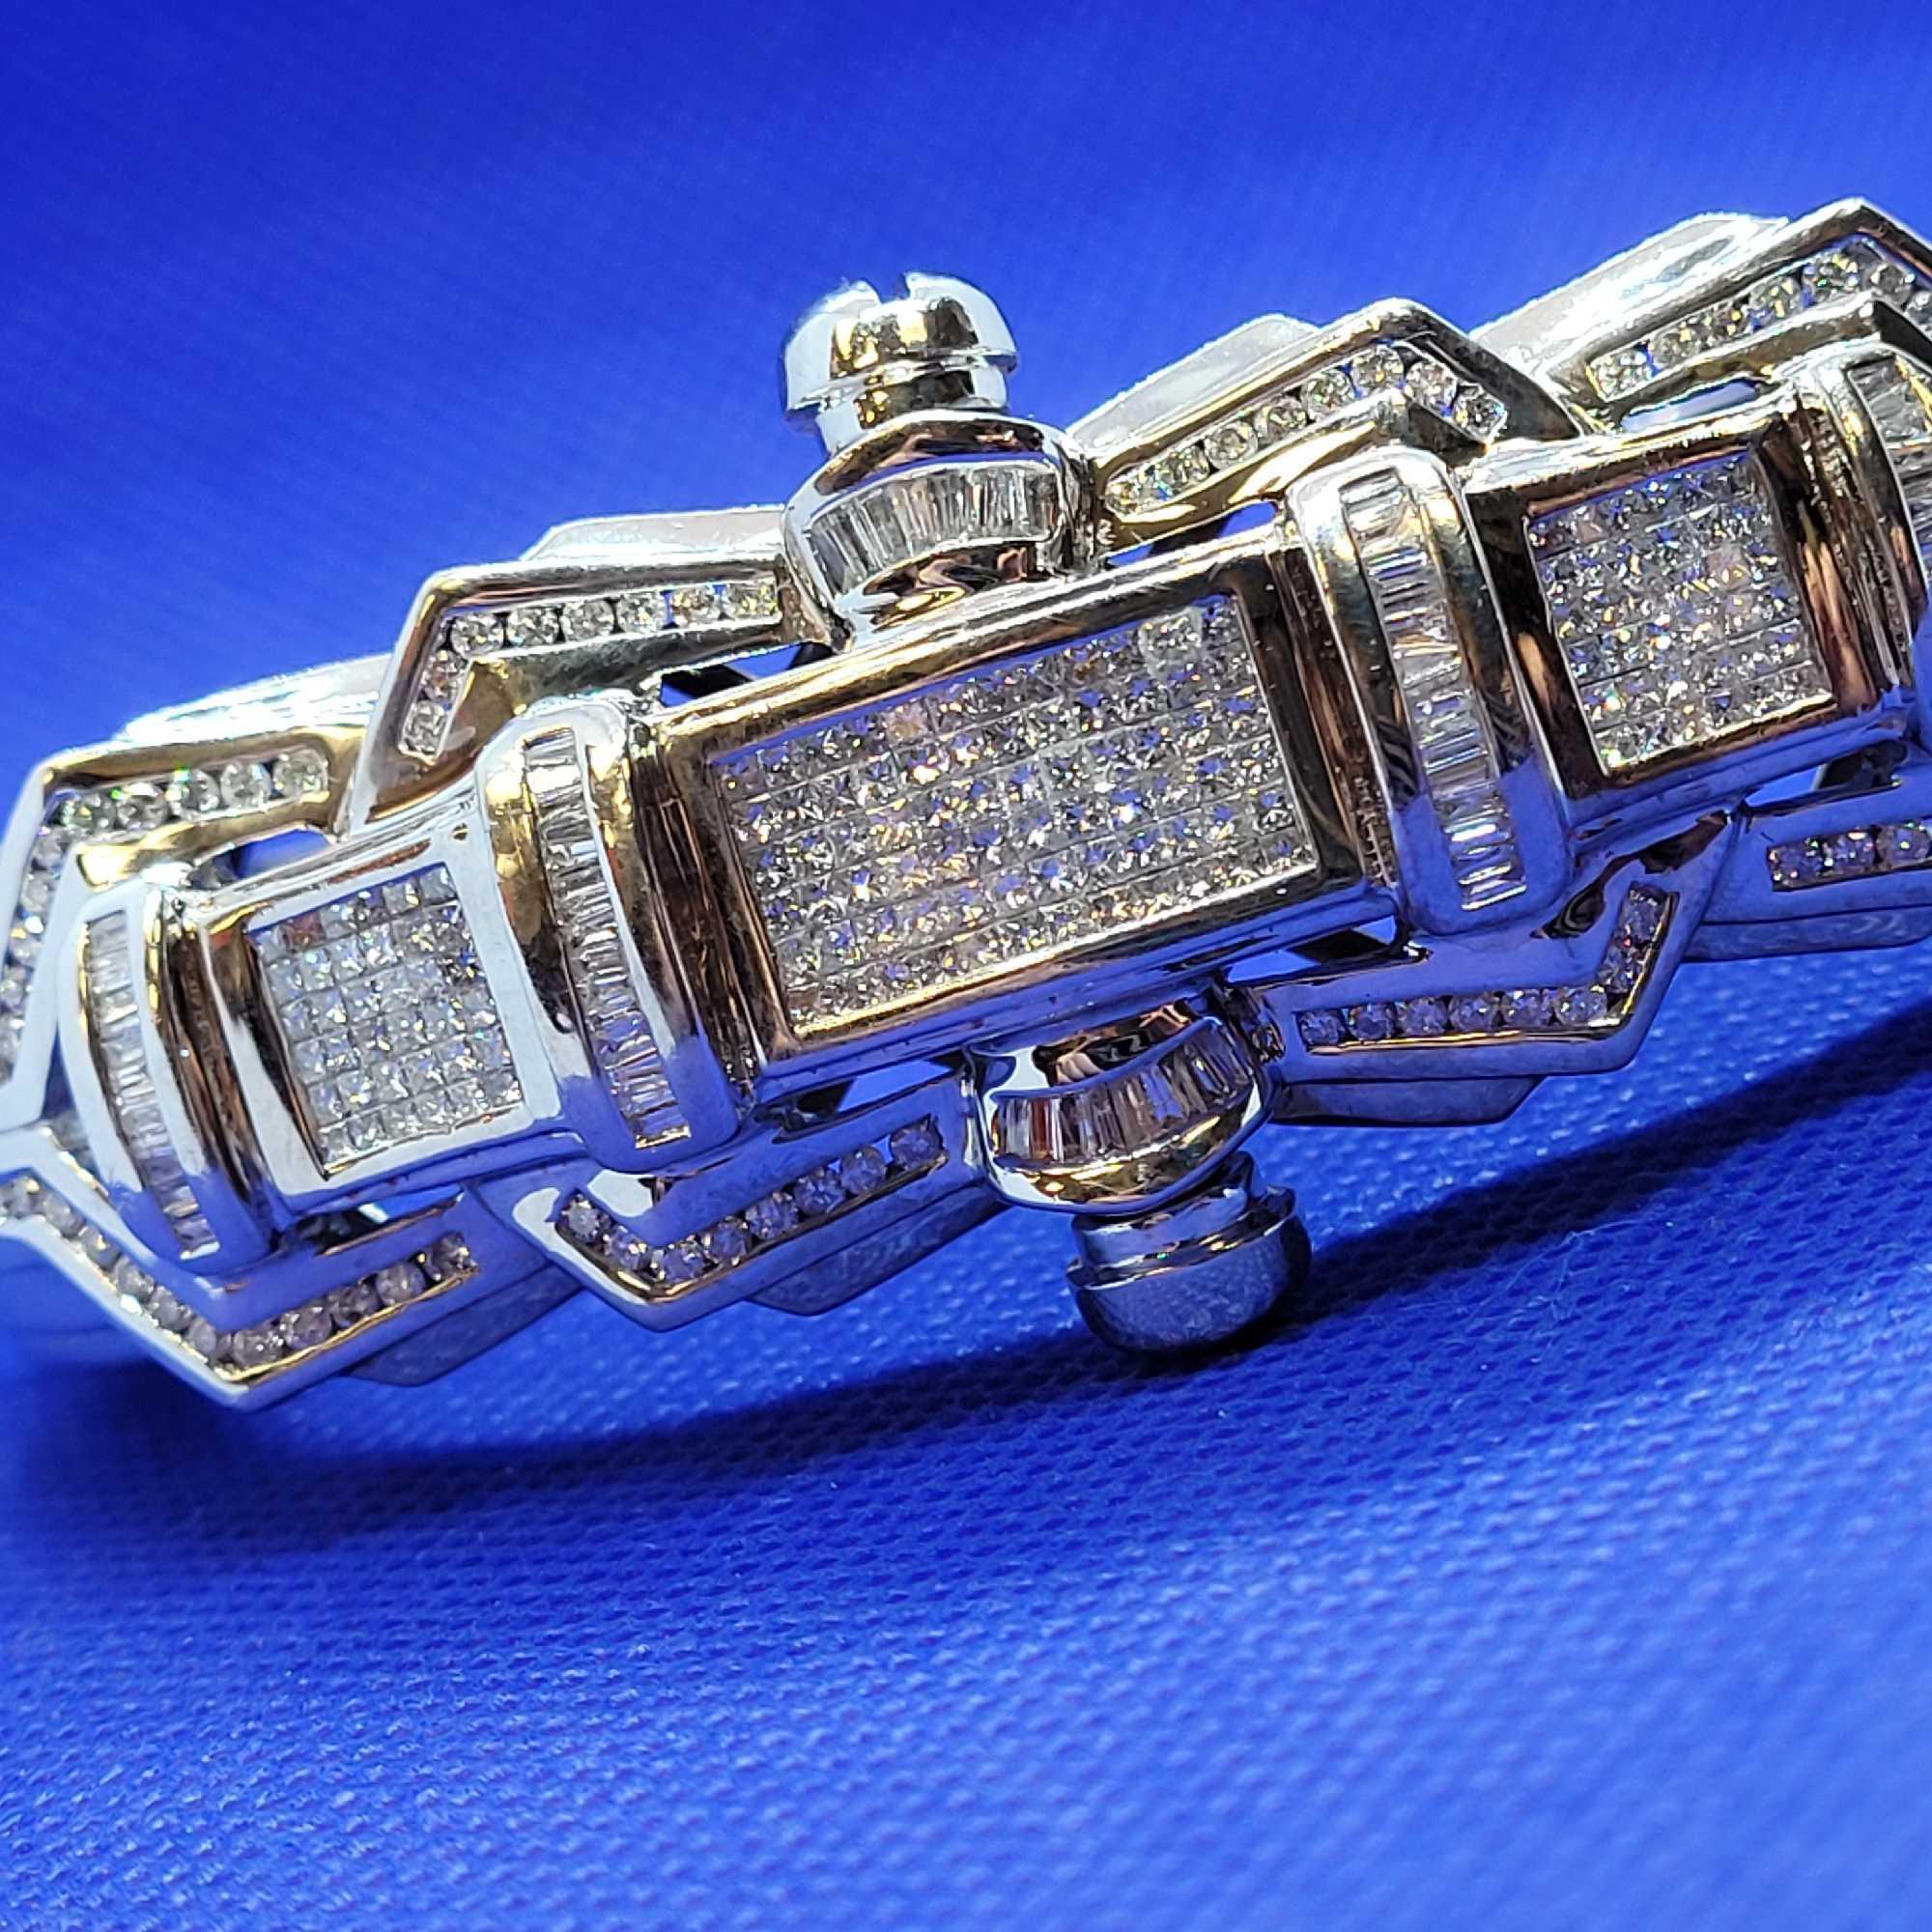 Greg Valentines Pro Wrestler 14k White Gold With Diamond Bracelet BBA Authentication